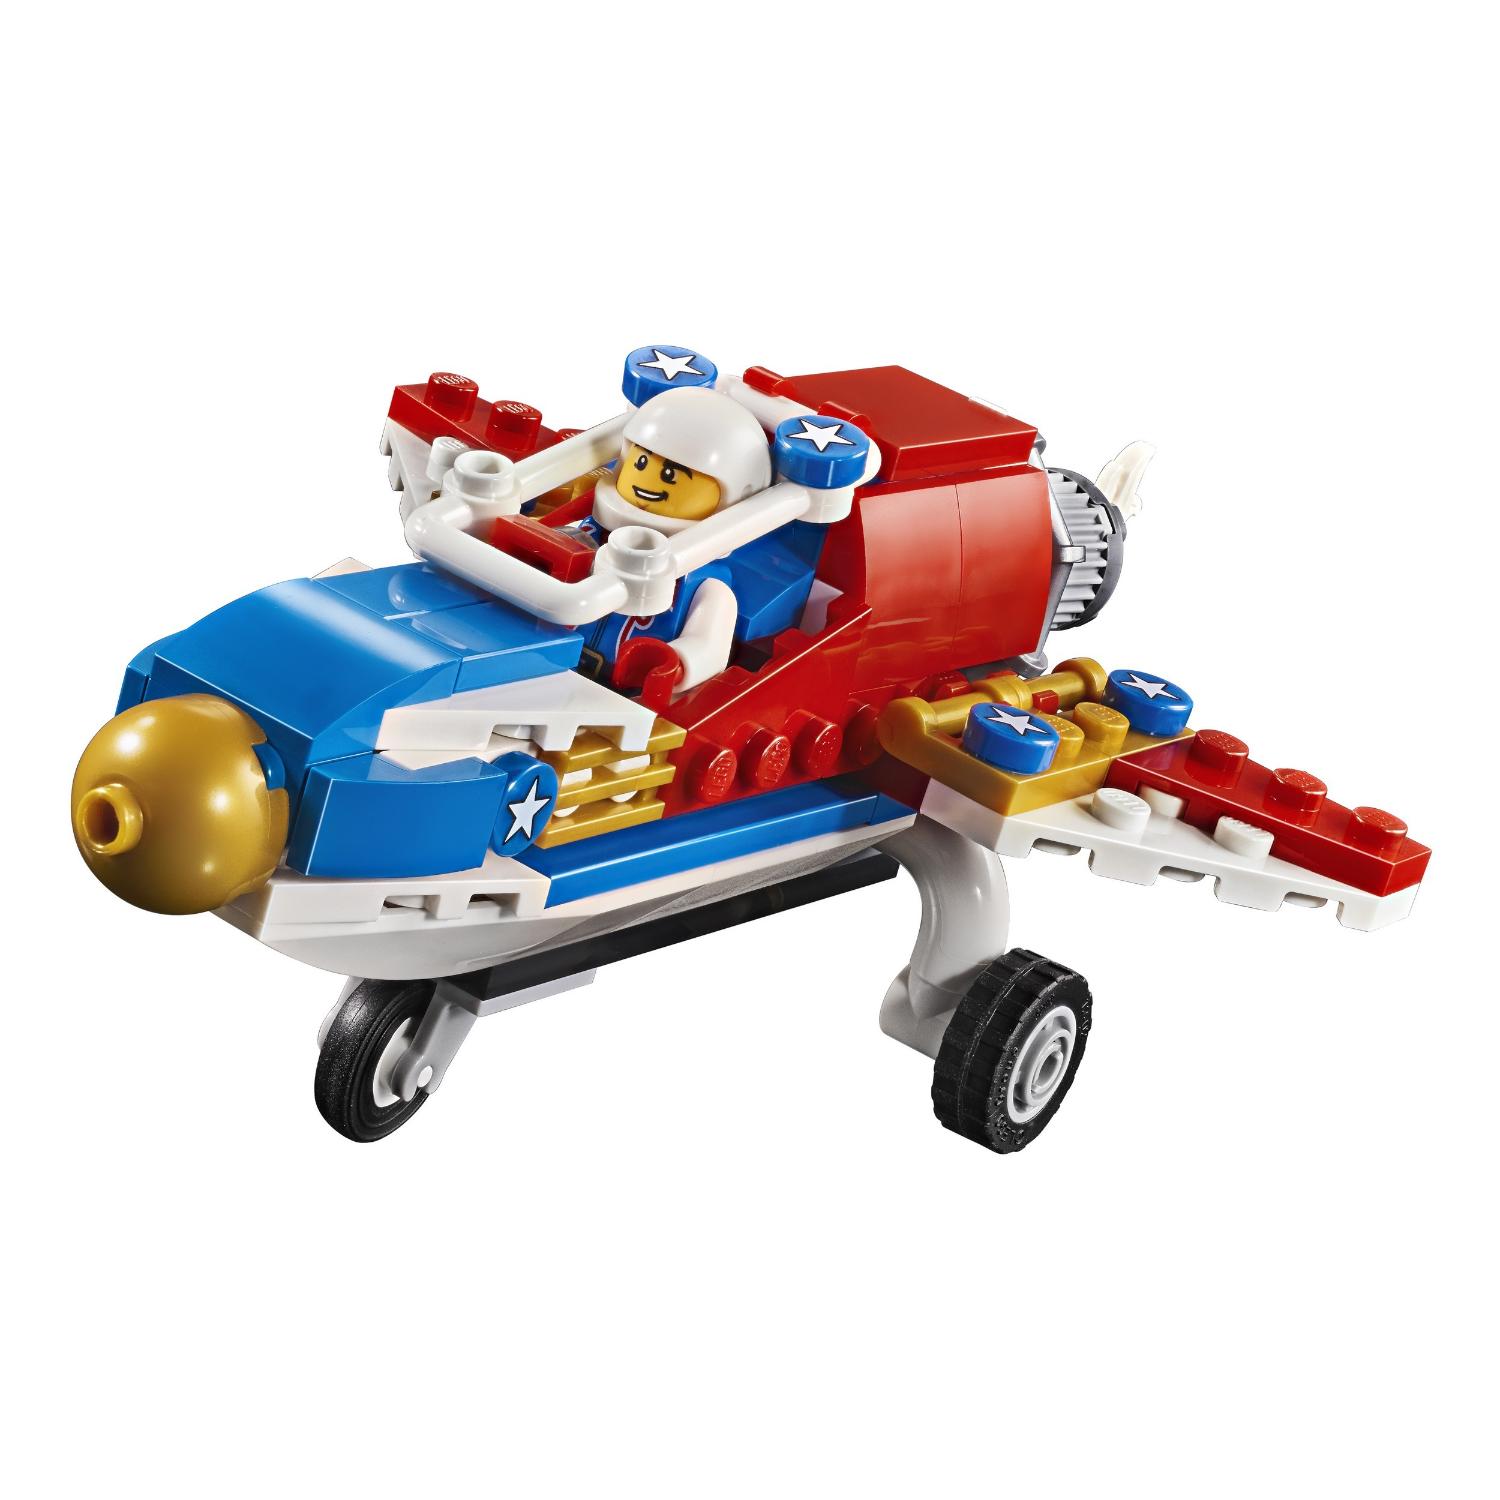 Lego Creator 31076 Самолёт для крутых трюков